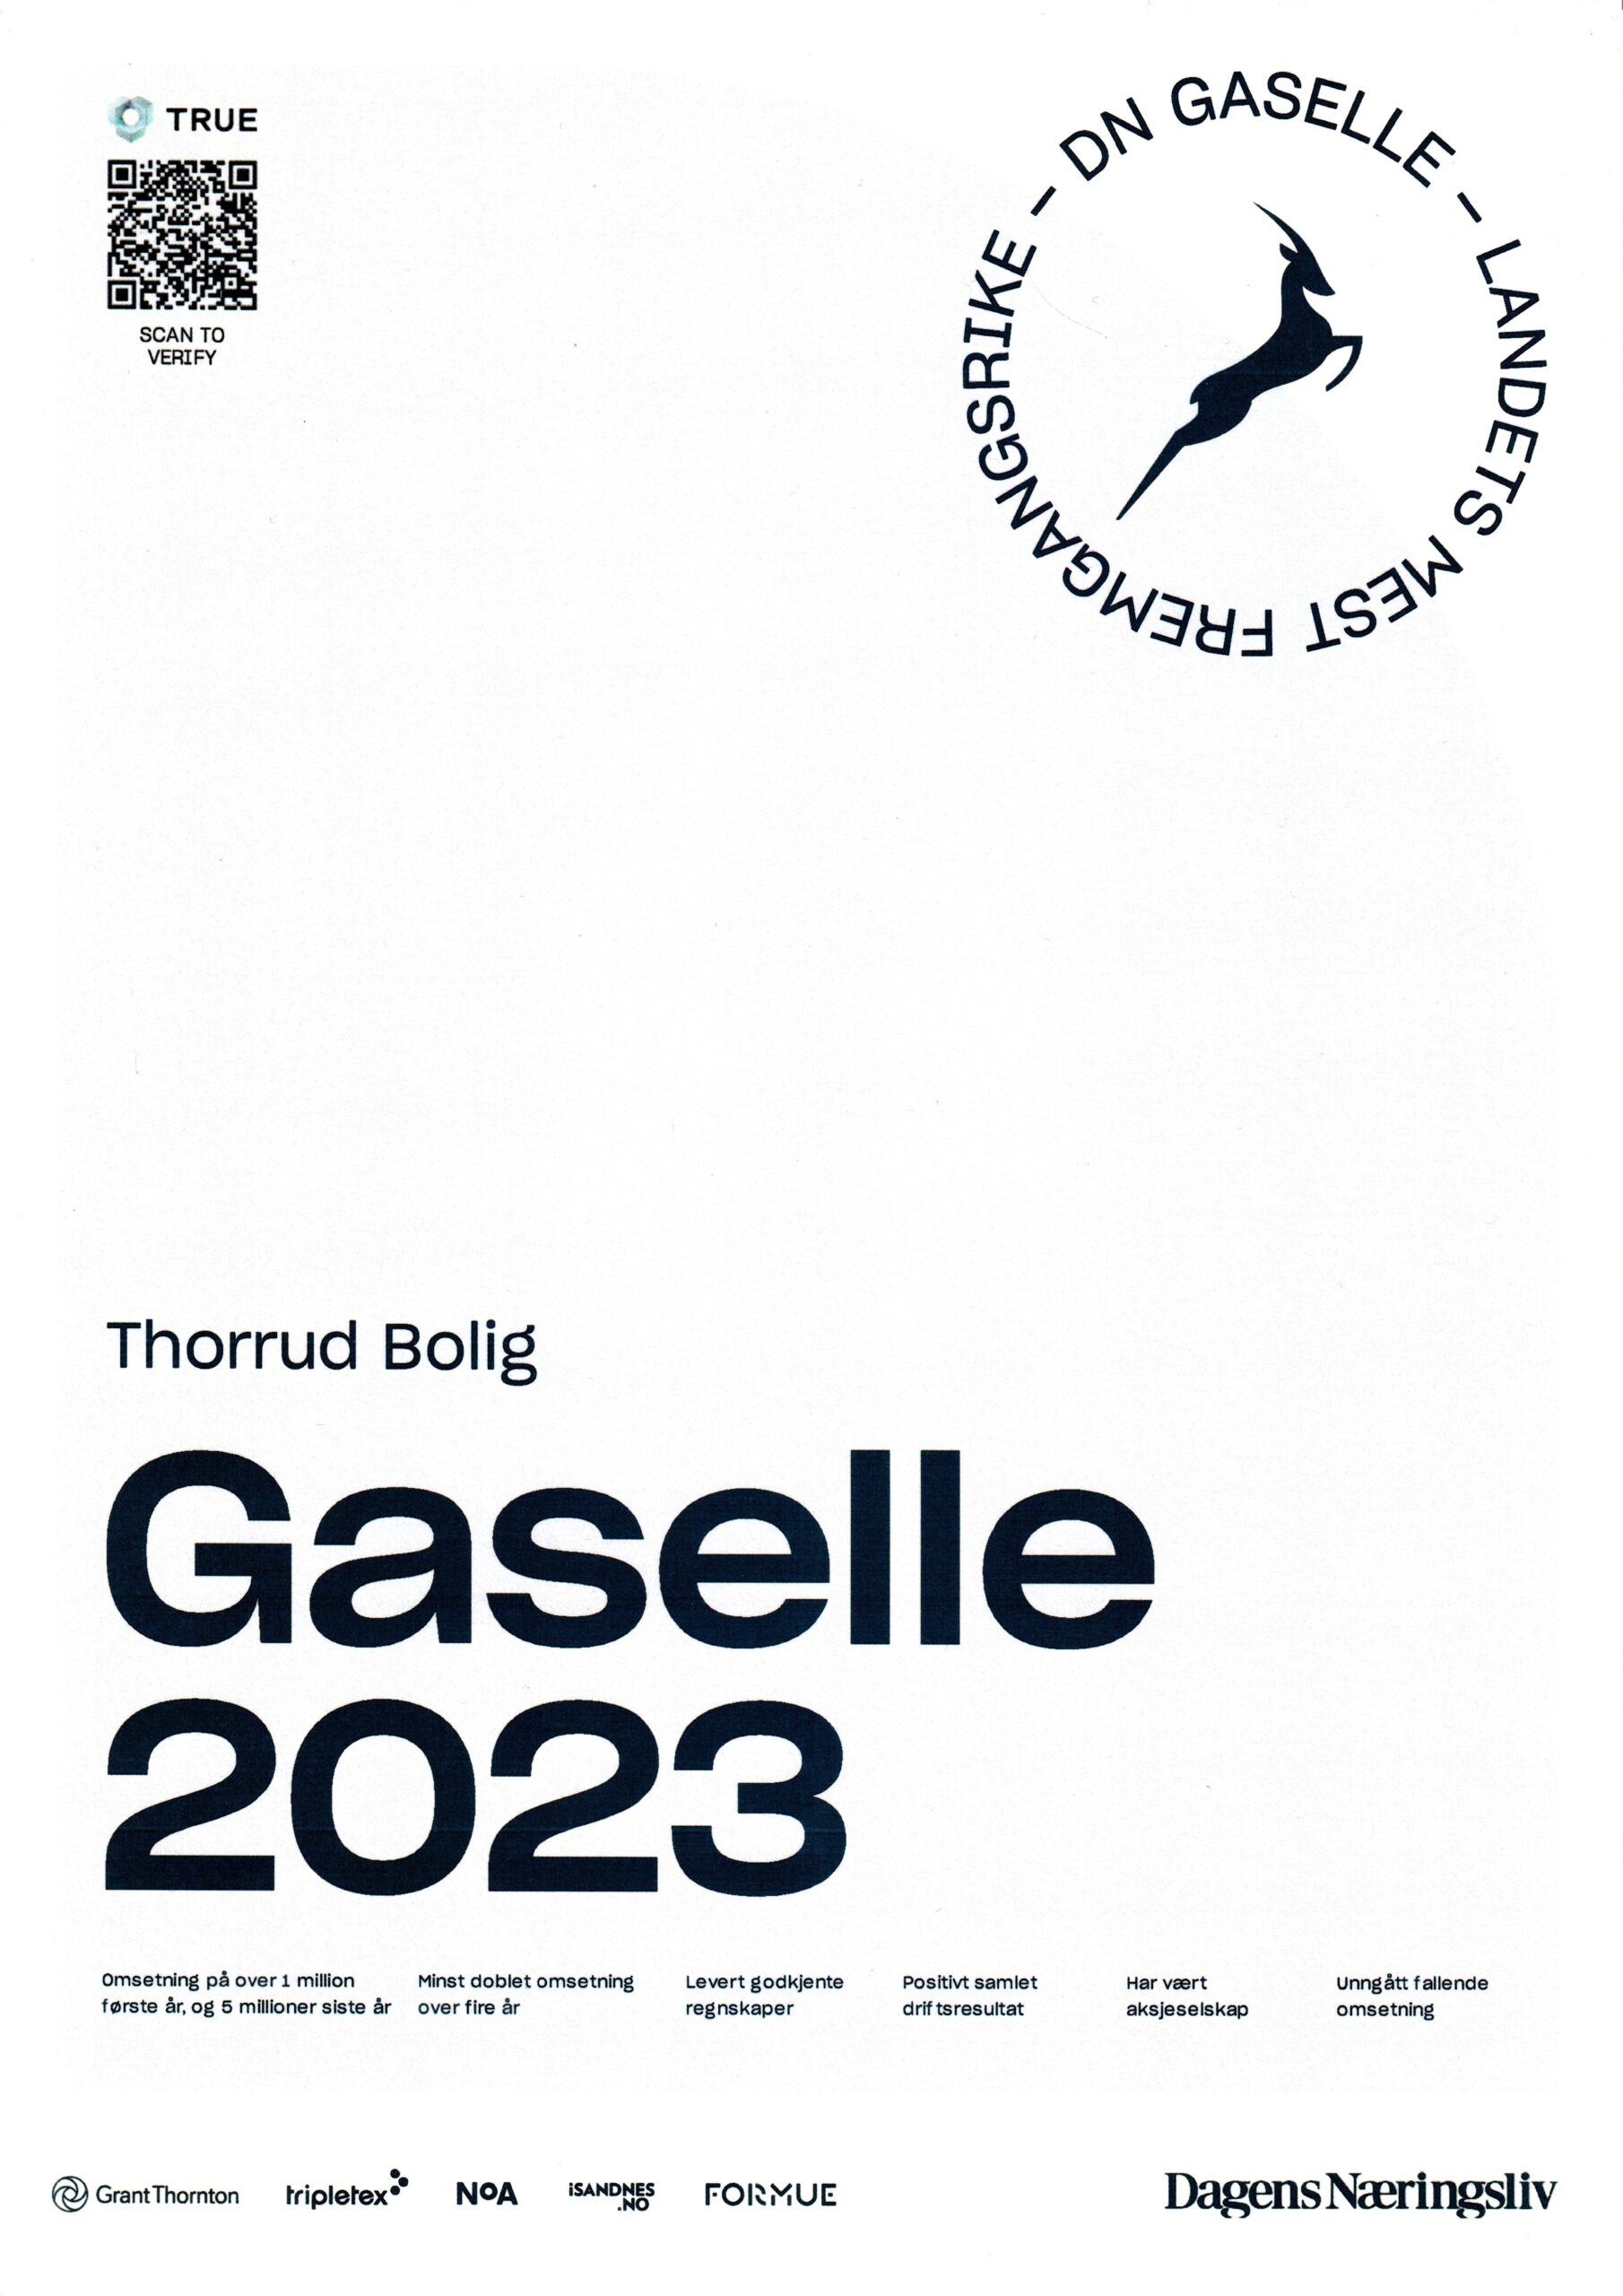 Thorrud Bolig AS- Gasellebedrift 2023